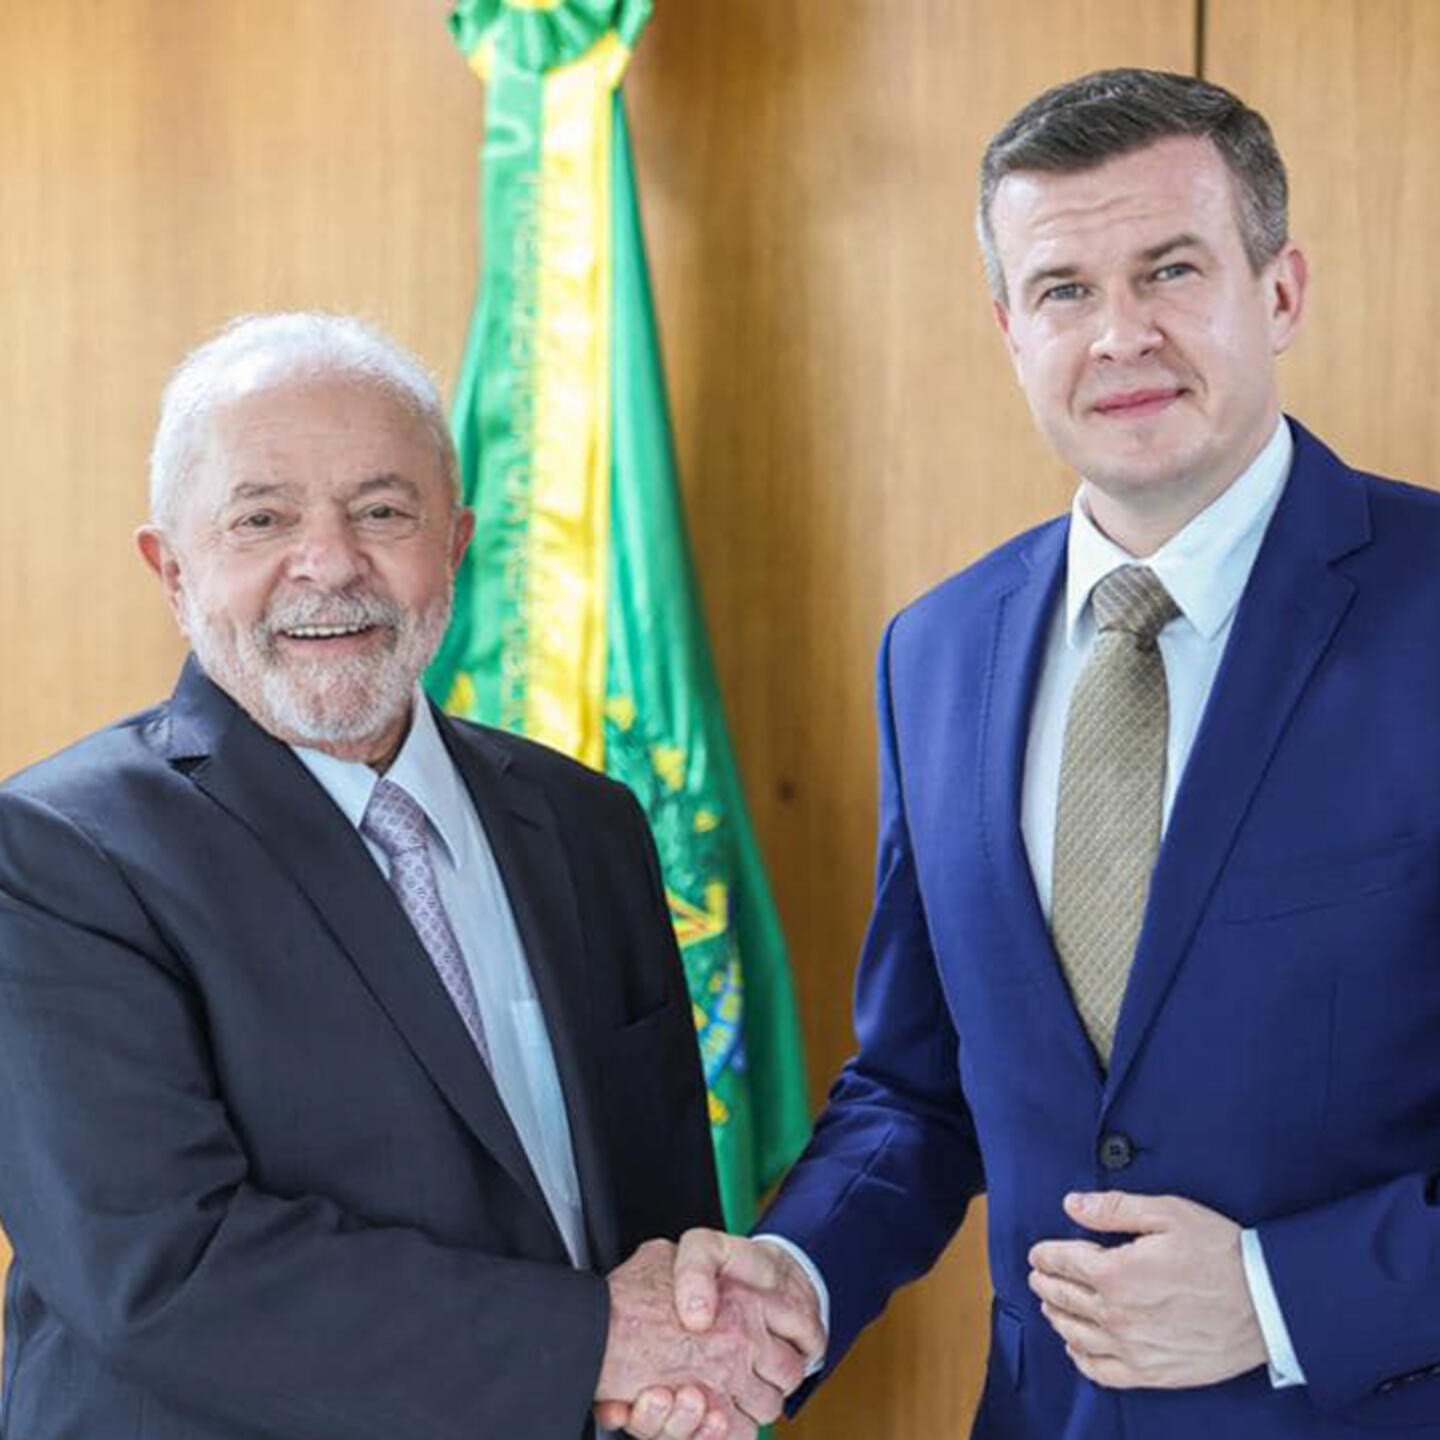 Bańka meets Brazilian President Lula on South America visit